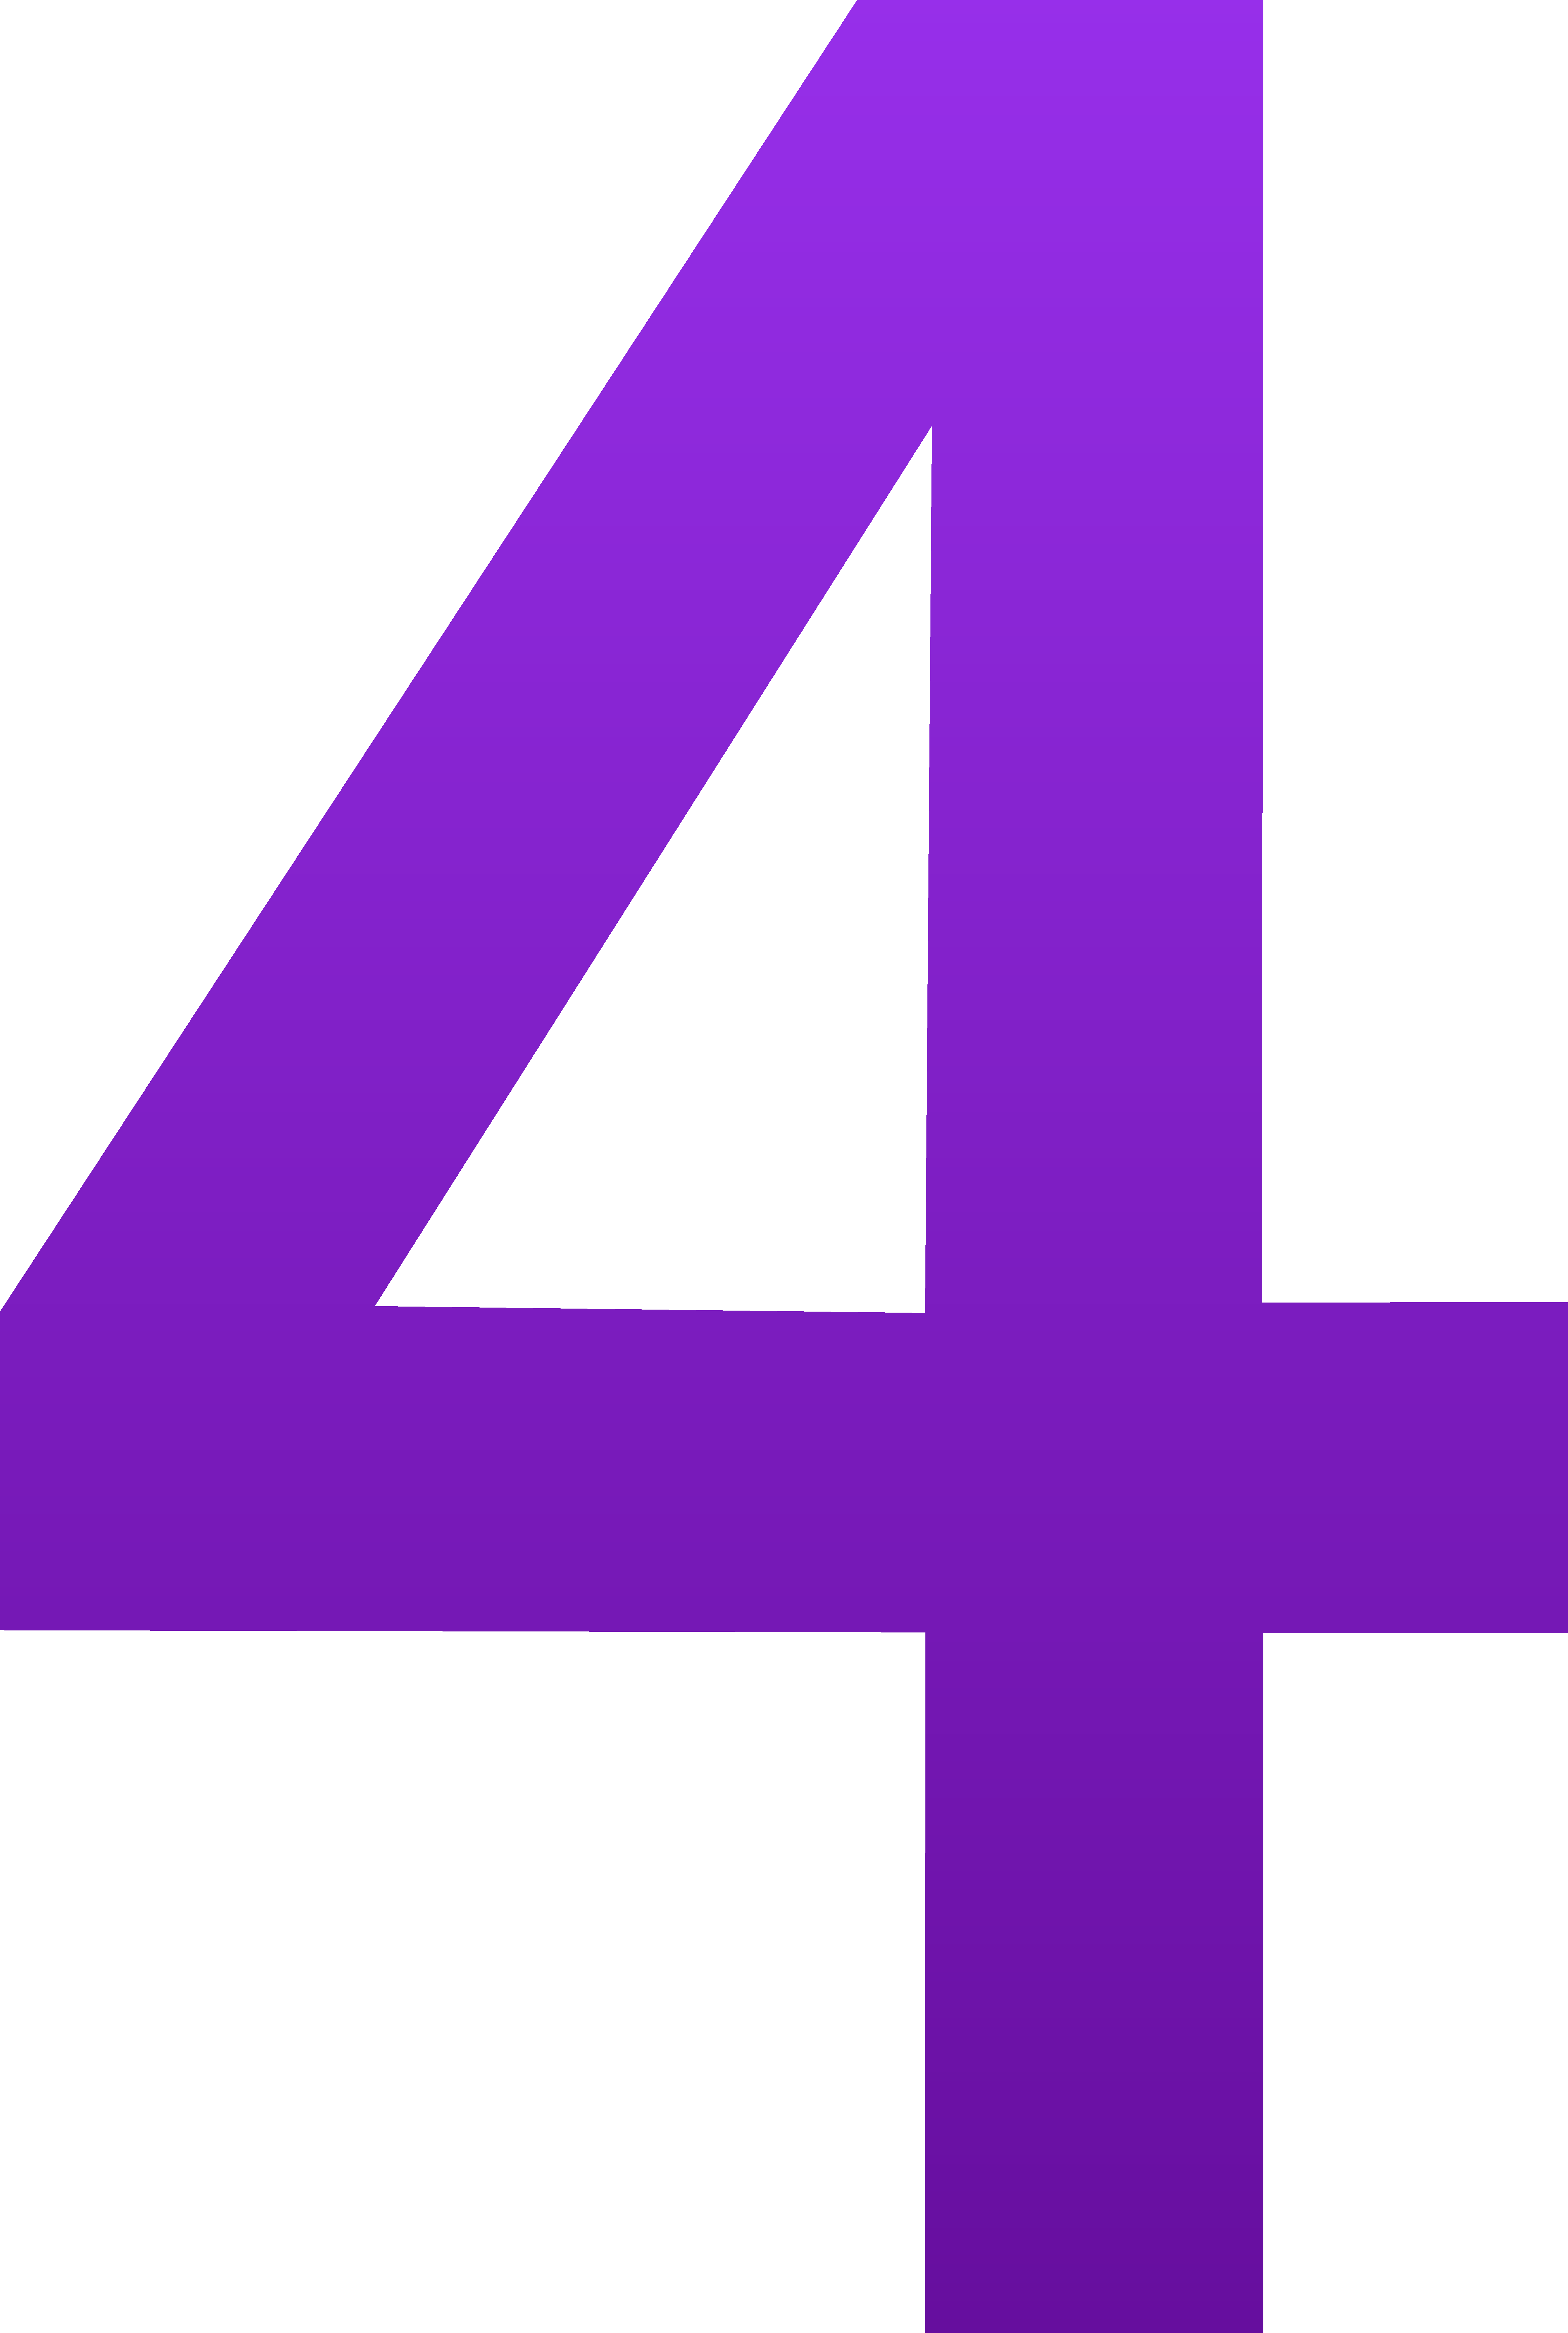 Number 4 clipart purple - ClipartFox